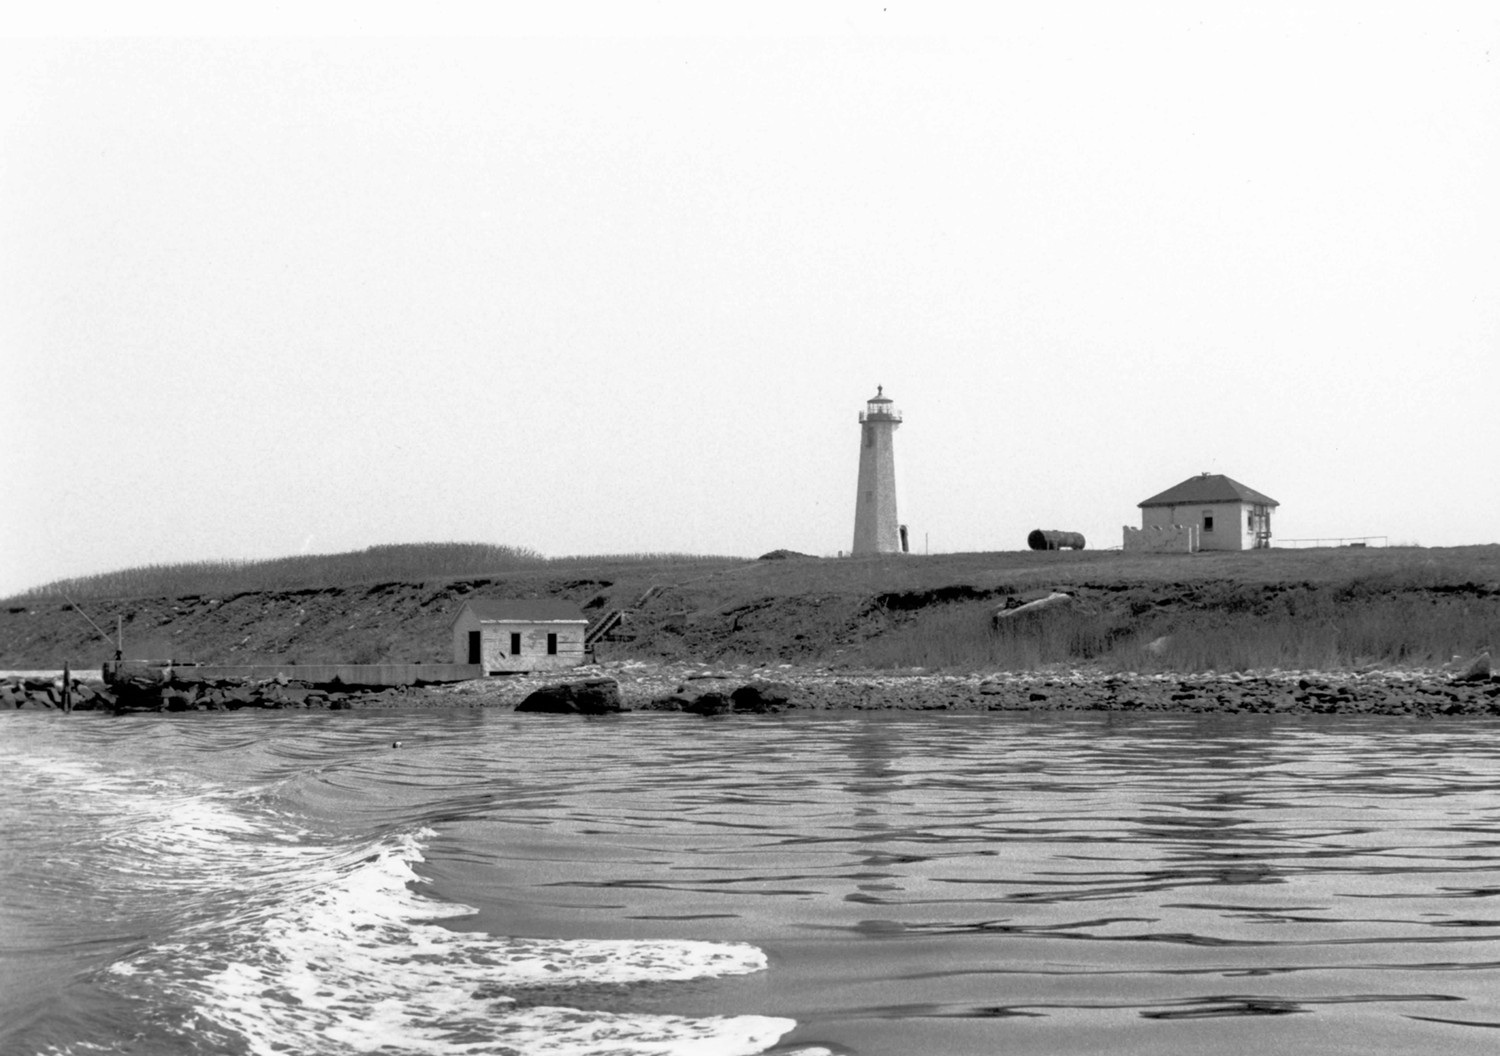 Falkner's Island Lighthouse, Falkner Island Connecticut Dock, boathouse, lighthouse, and powerhouse, camera facing northeast (1989)